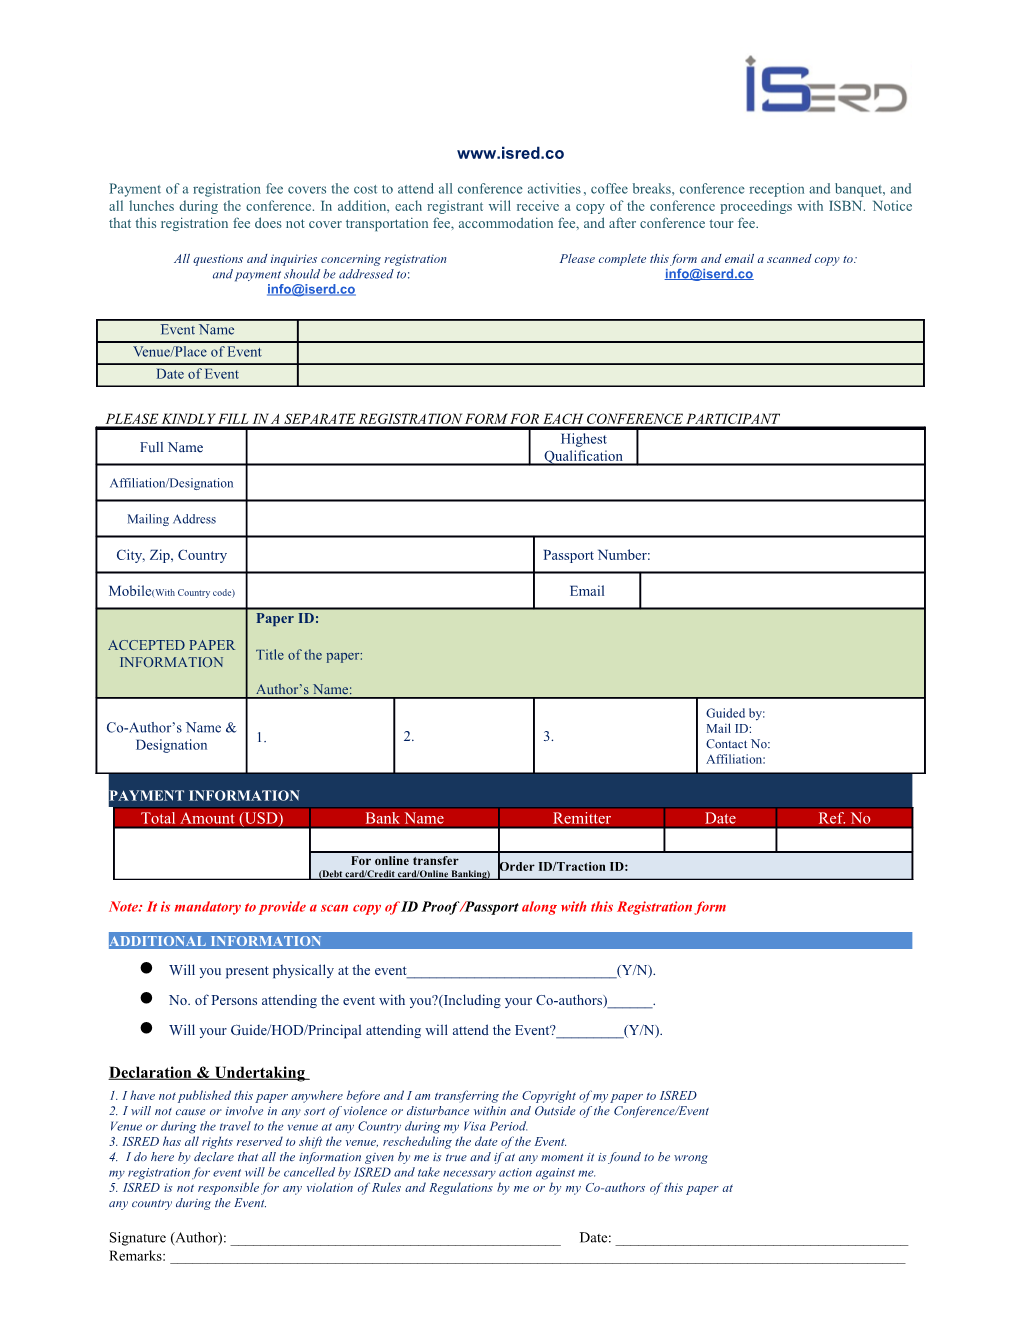 Ieee Rtcsa 2014 Registration Form s1